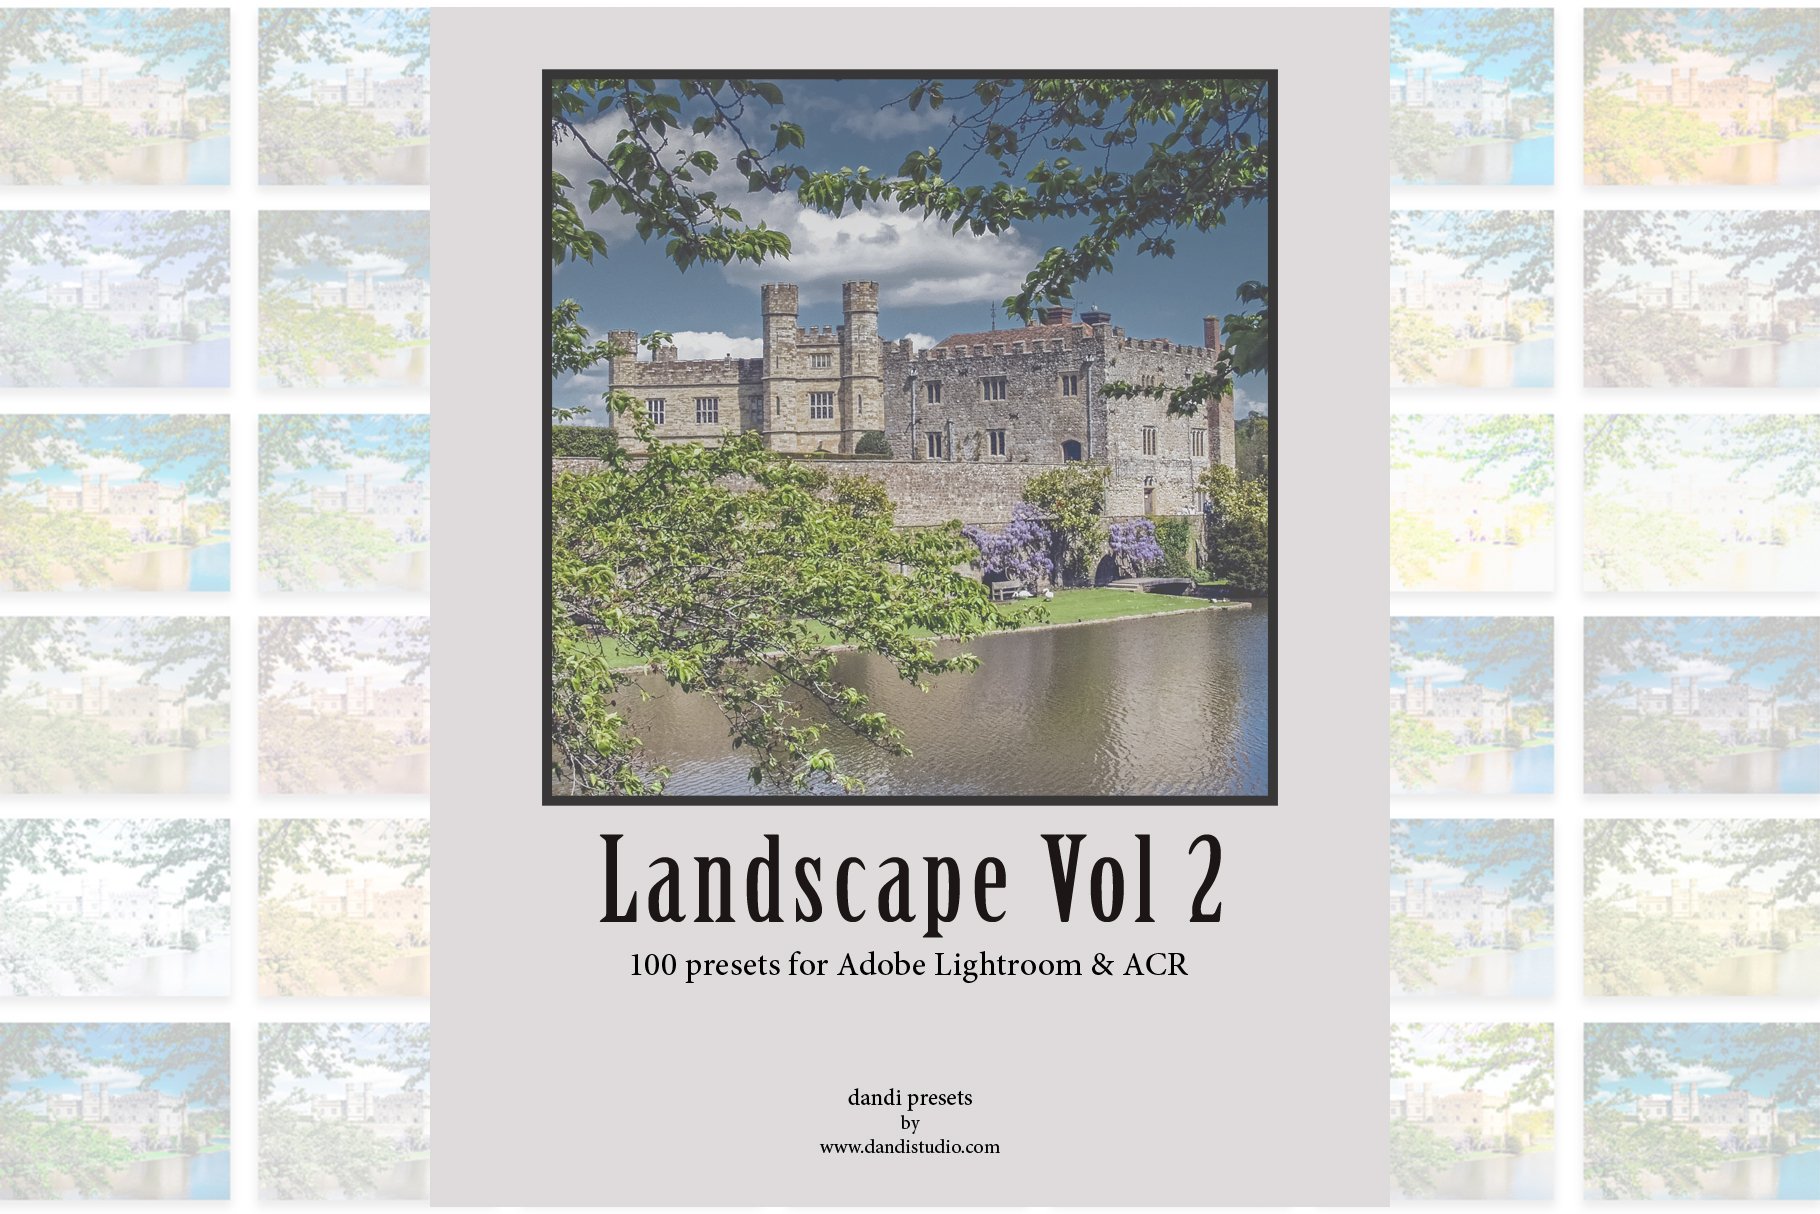 Landscape vol 2 Adobe presetscover image.